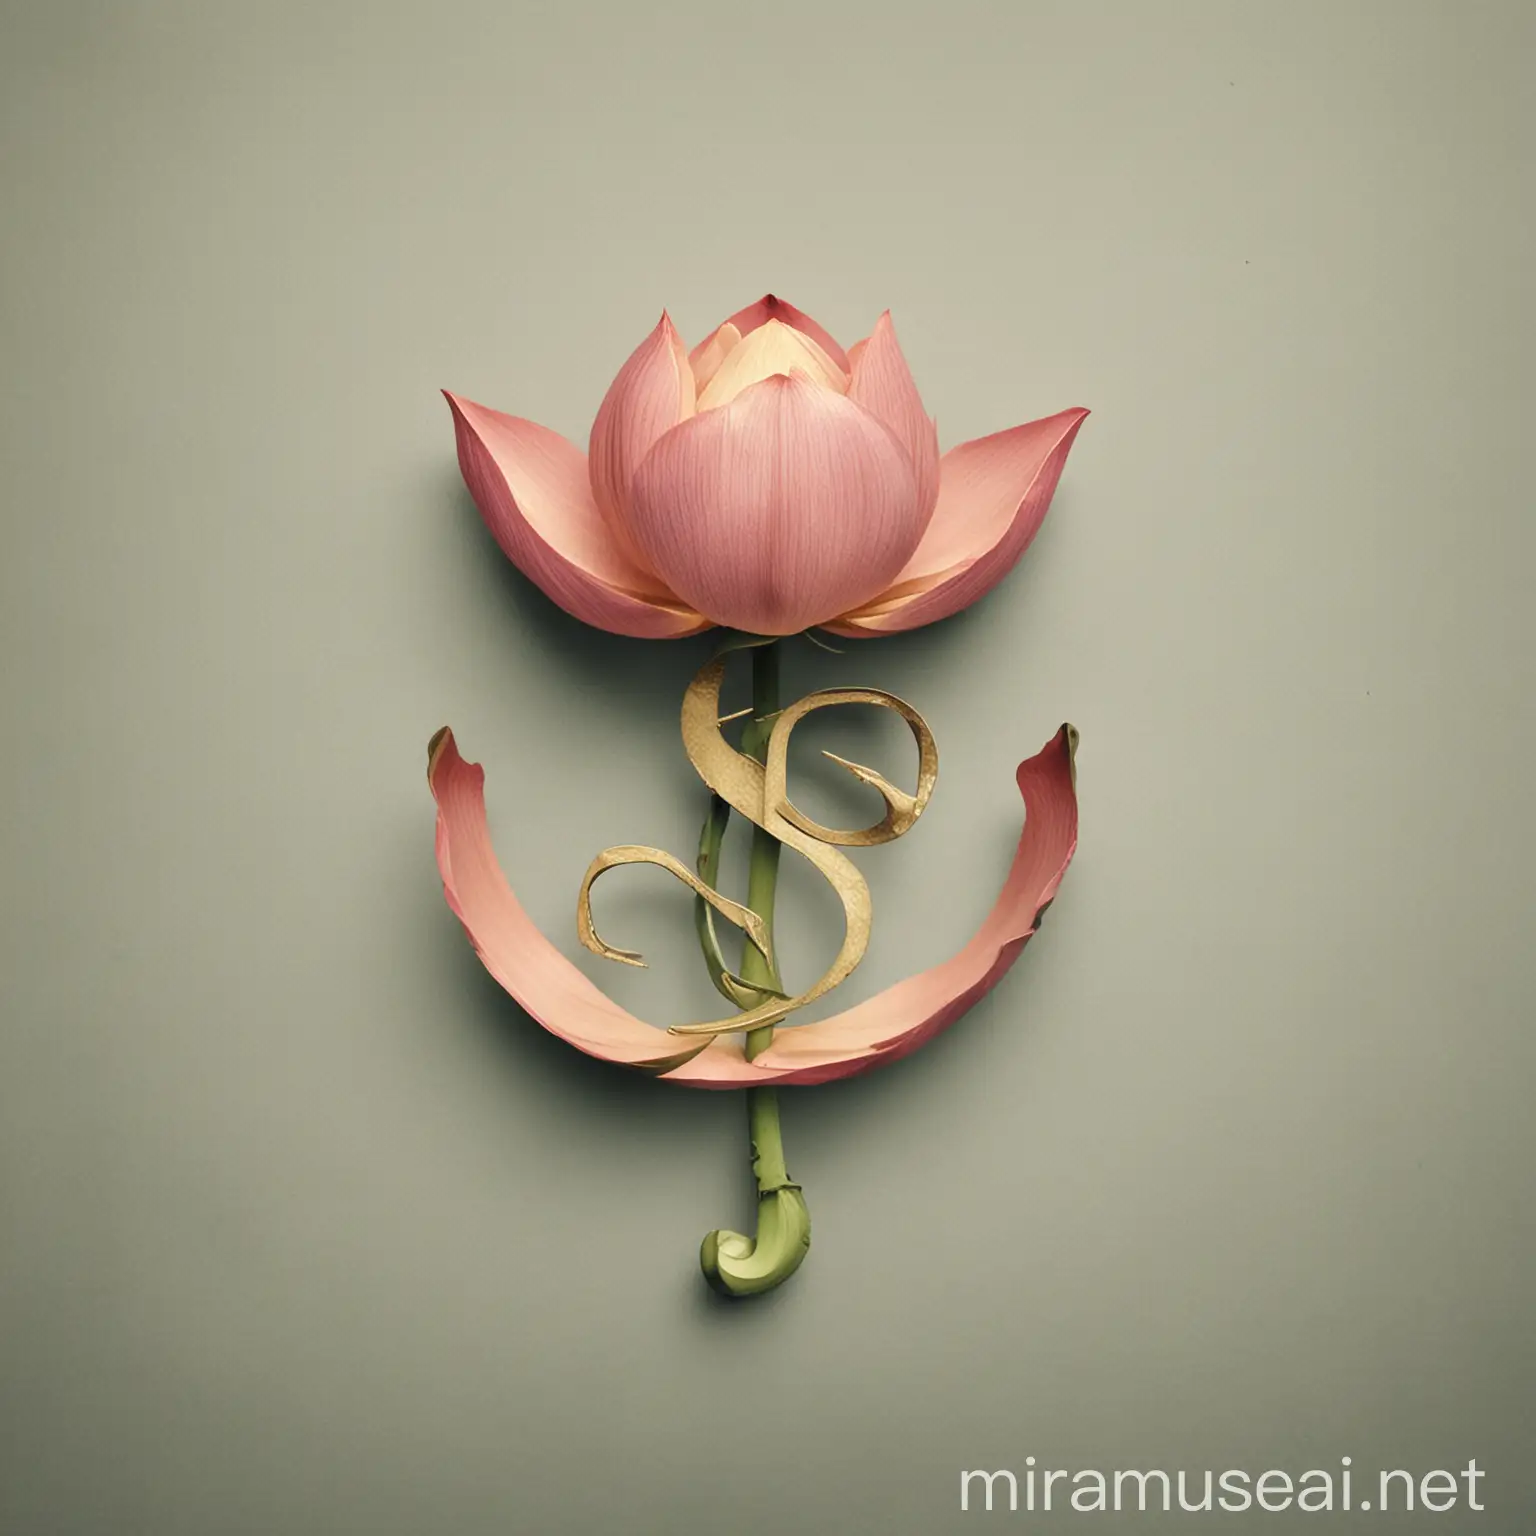 Lotus Flower with Letter S Floral Symbolism and Alphabet Integration